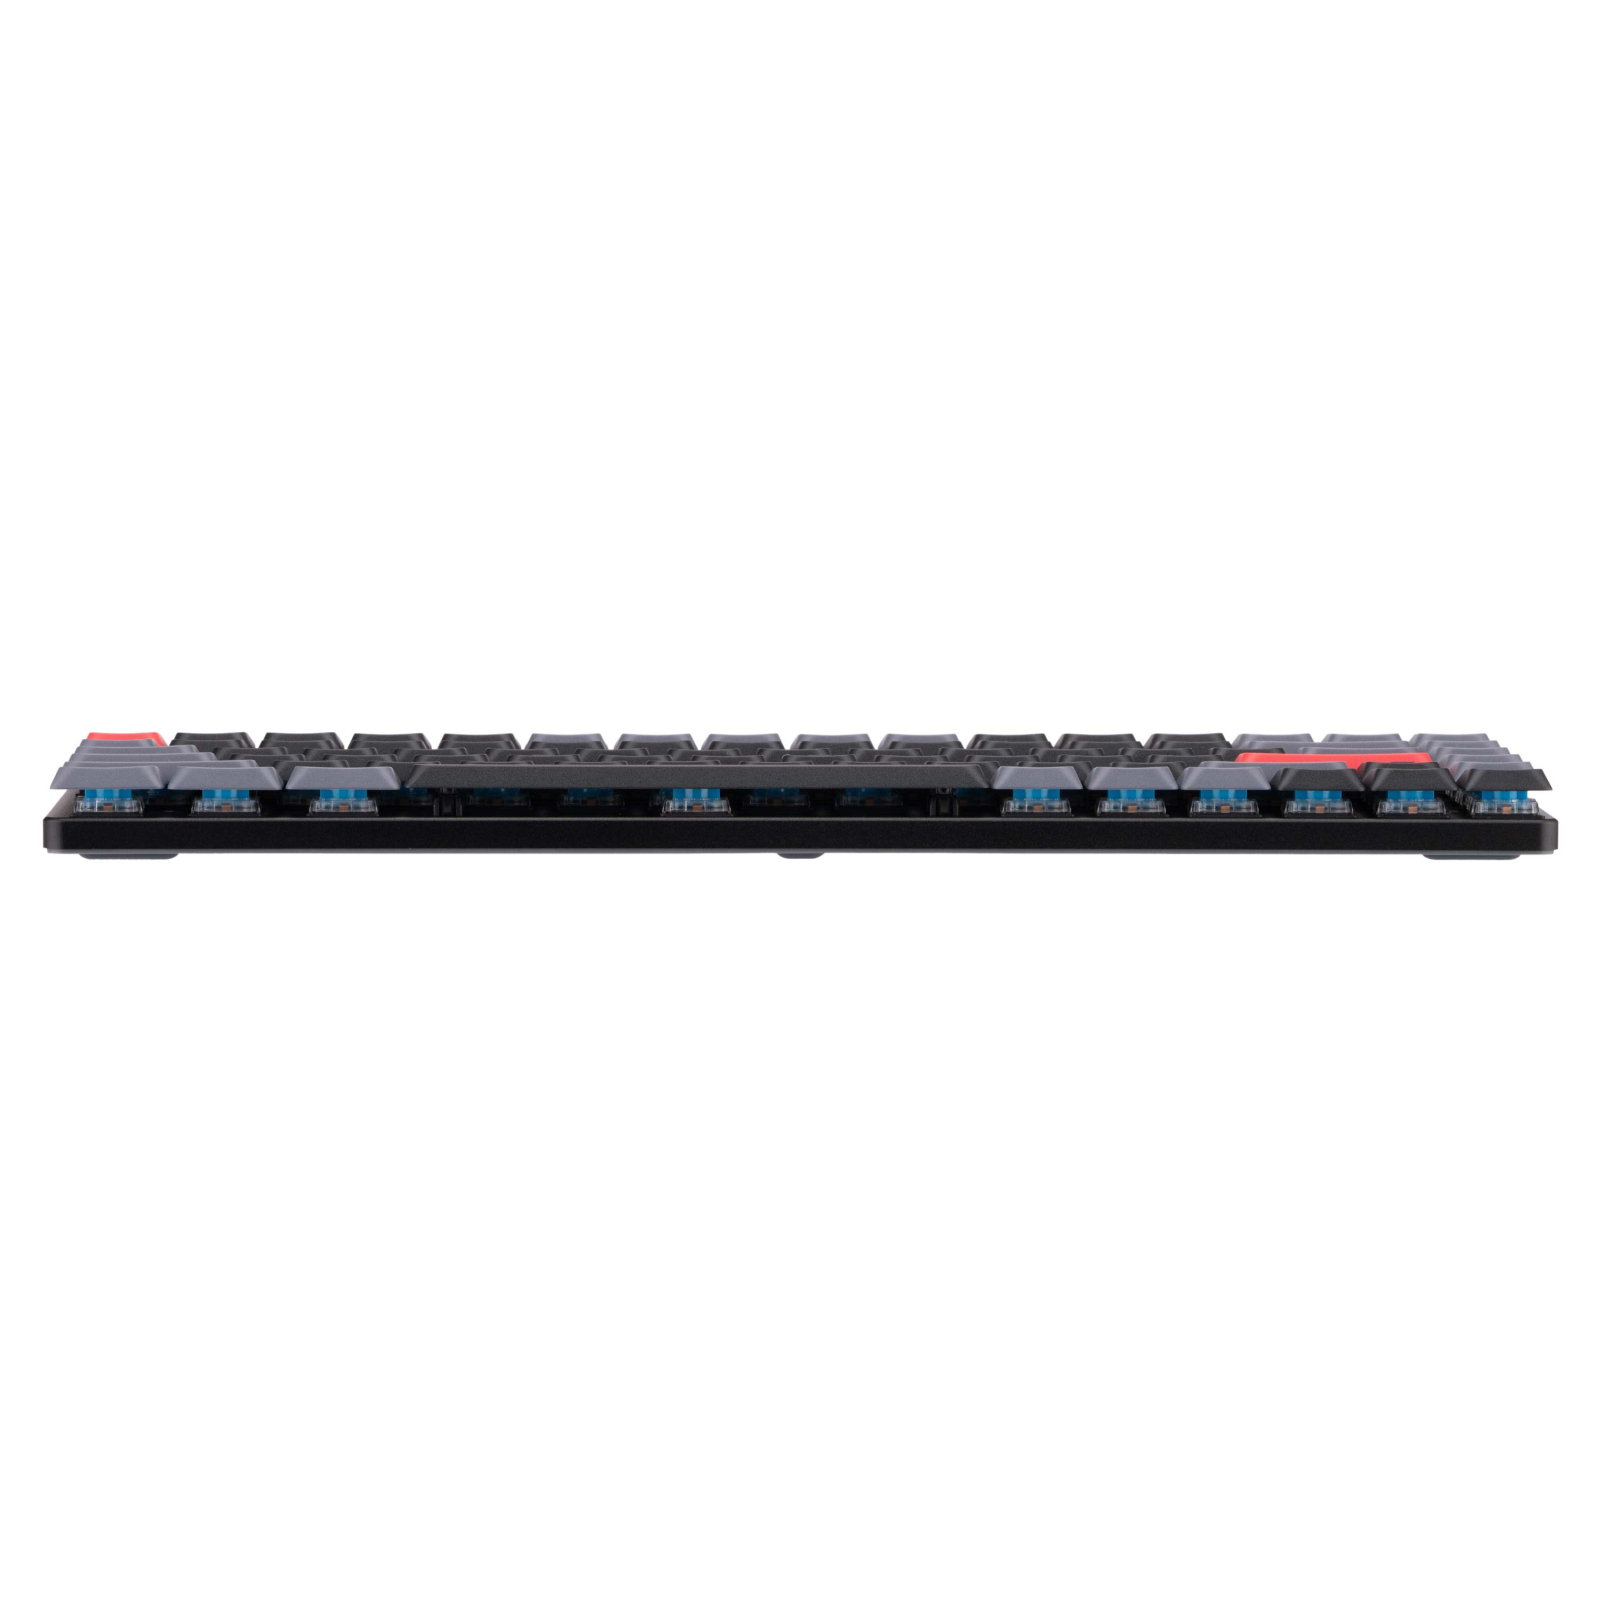 Клавиатура Keychron K3 PRO 84Key Gateron Red Hot-swap Low Profile QMK UA RGB Black (K3PH1_KEYCHRON) изображение 6